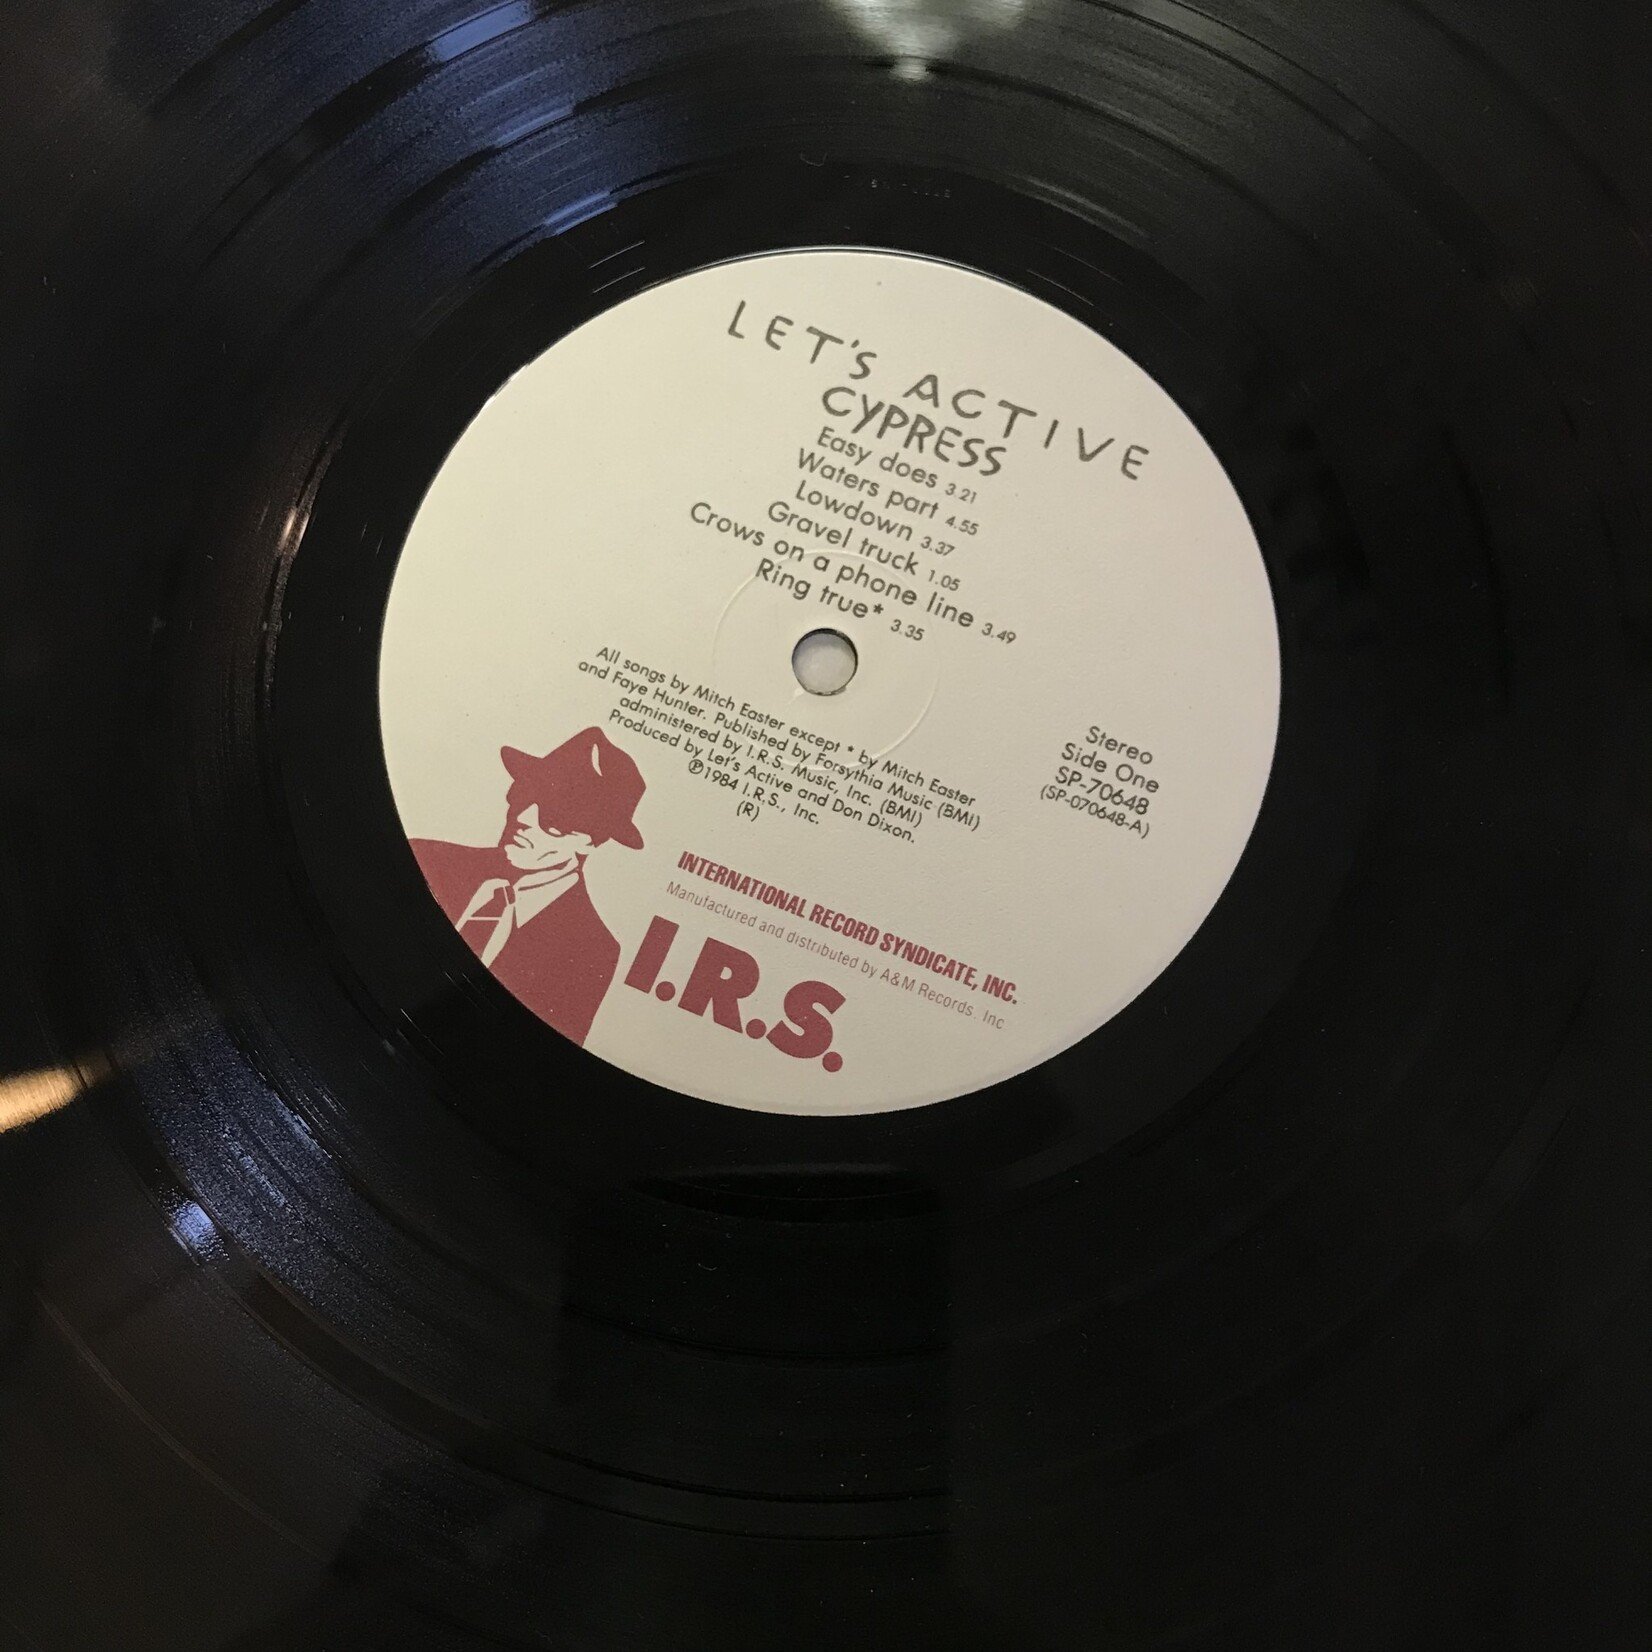 Let’s Active - Cypress - SP70648 - Vinyl LP (USED)